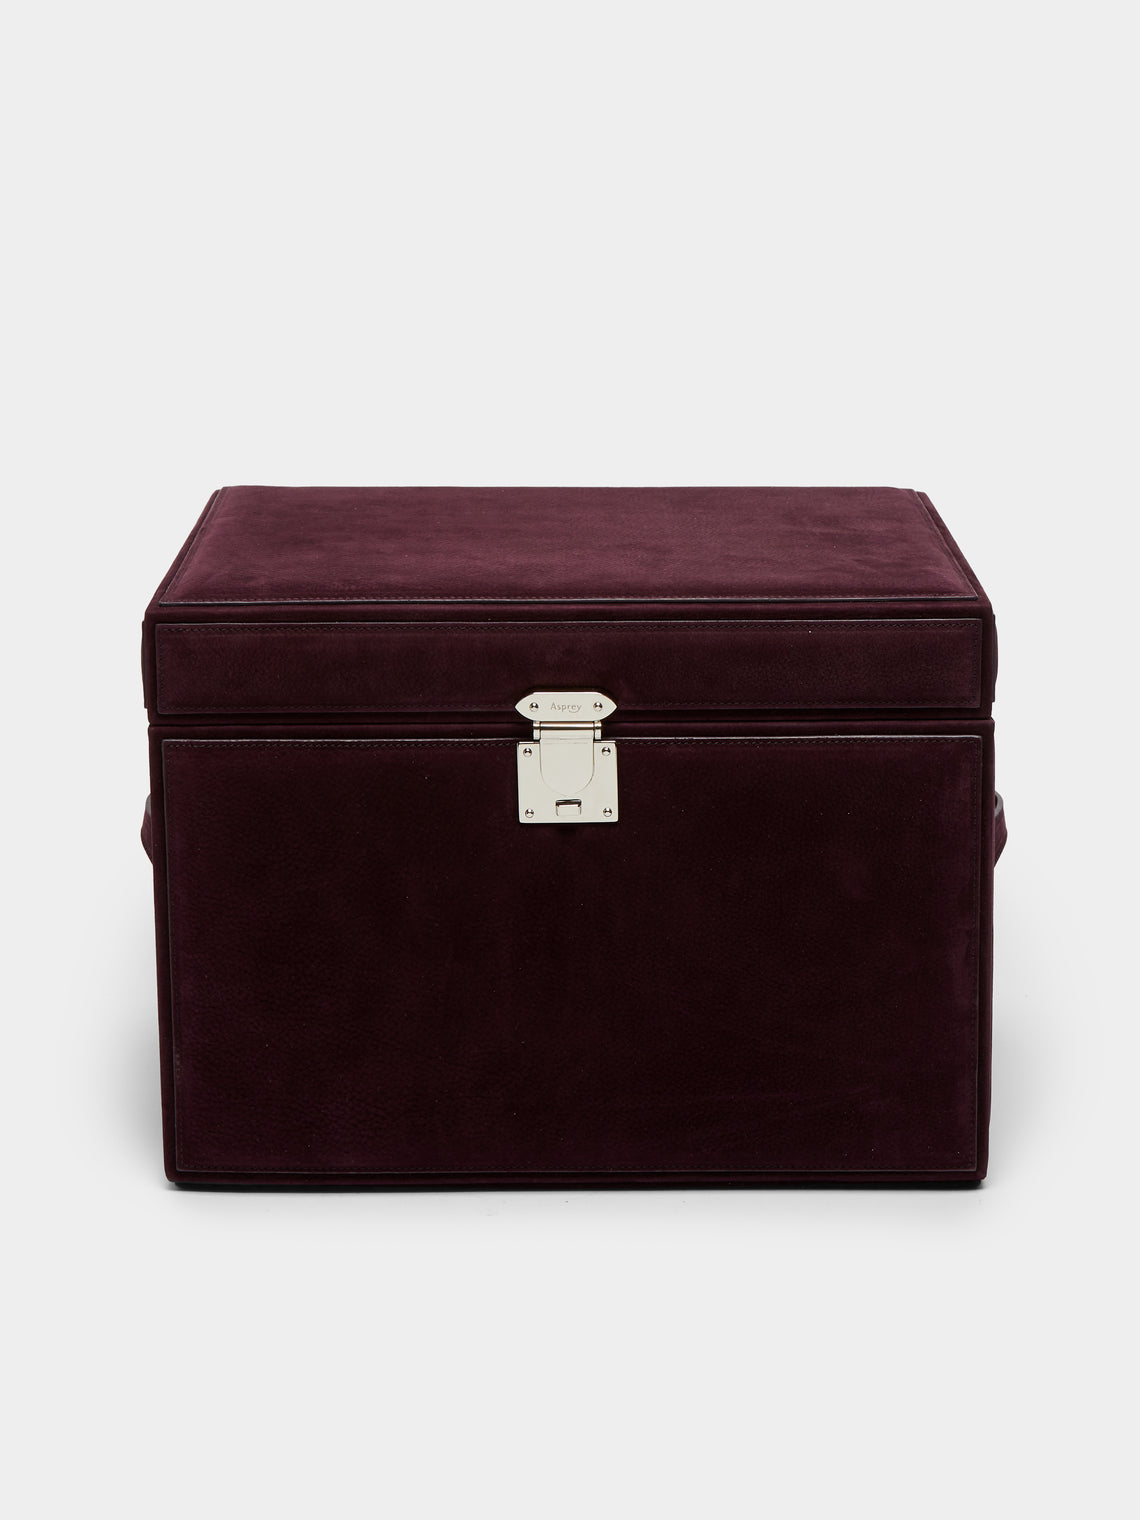 Asprey - Large Leather Jewellery Box -  - ABASK - 